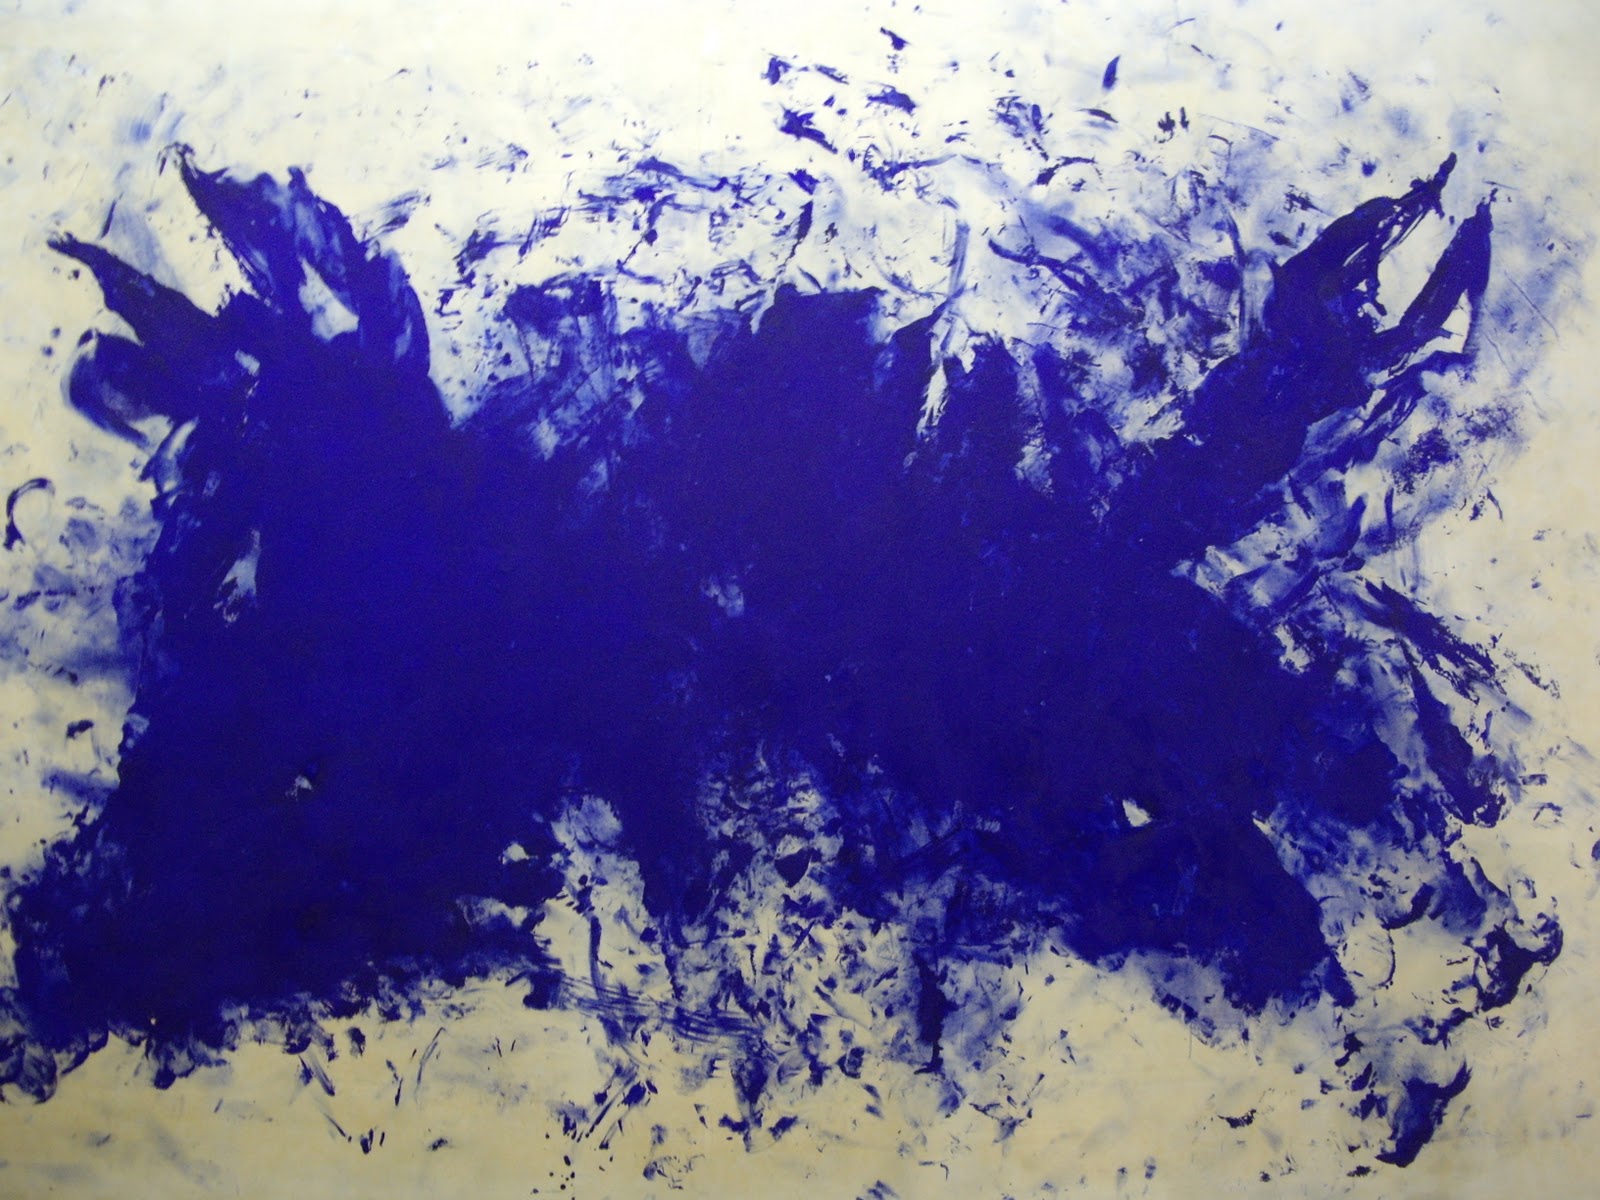 Gran canibalismo azul, homenaje a Tennessee Williams by Yves Klein - 1960 - 276 x 418 cm Centro Nacional de Arte y Cultura Georges Pompidou